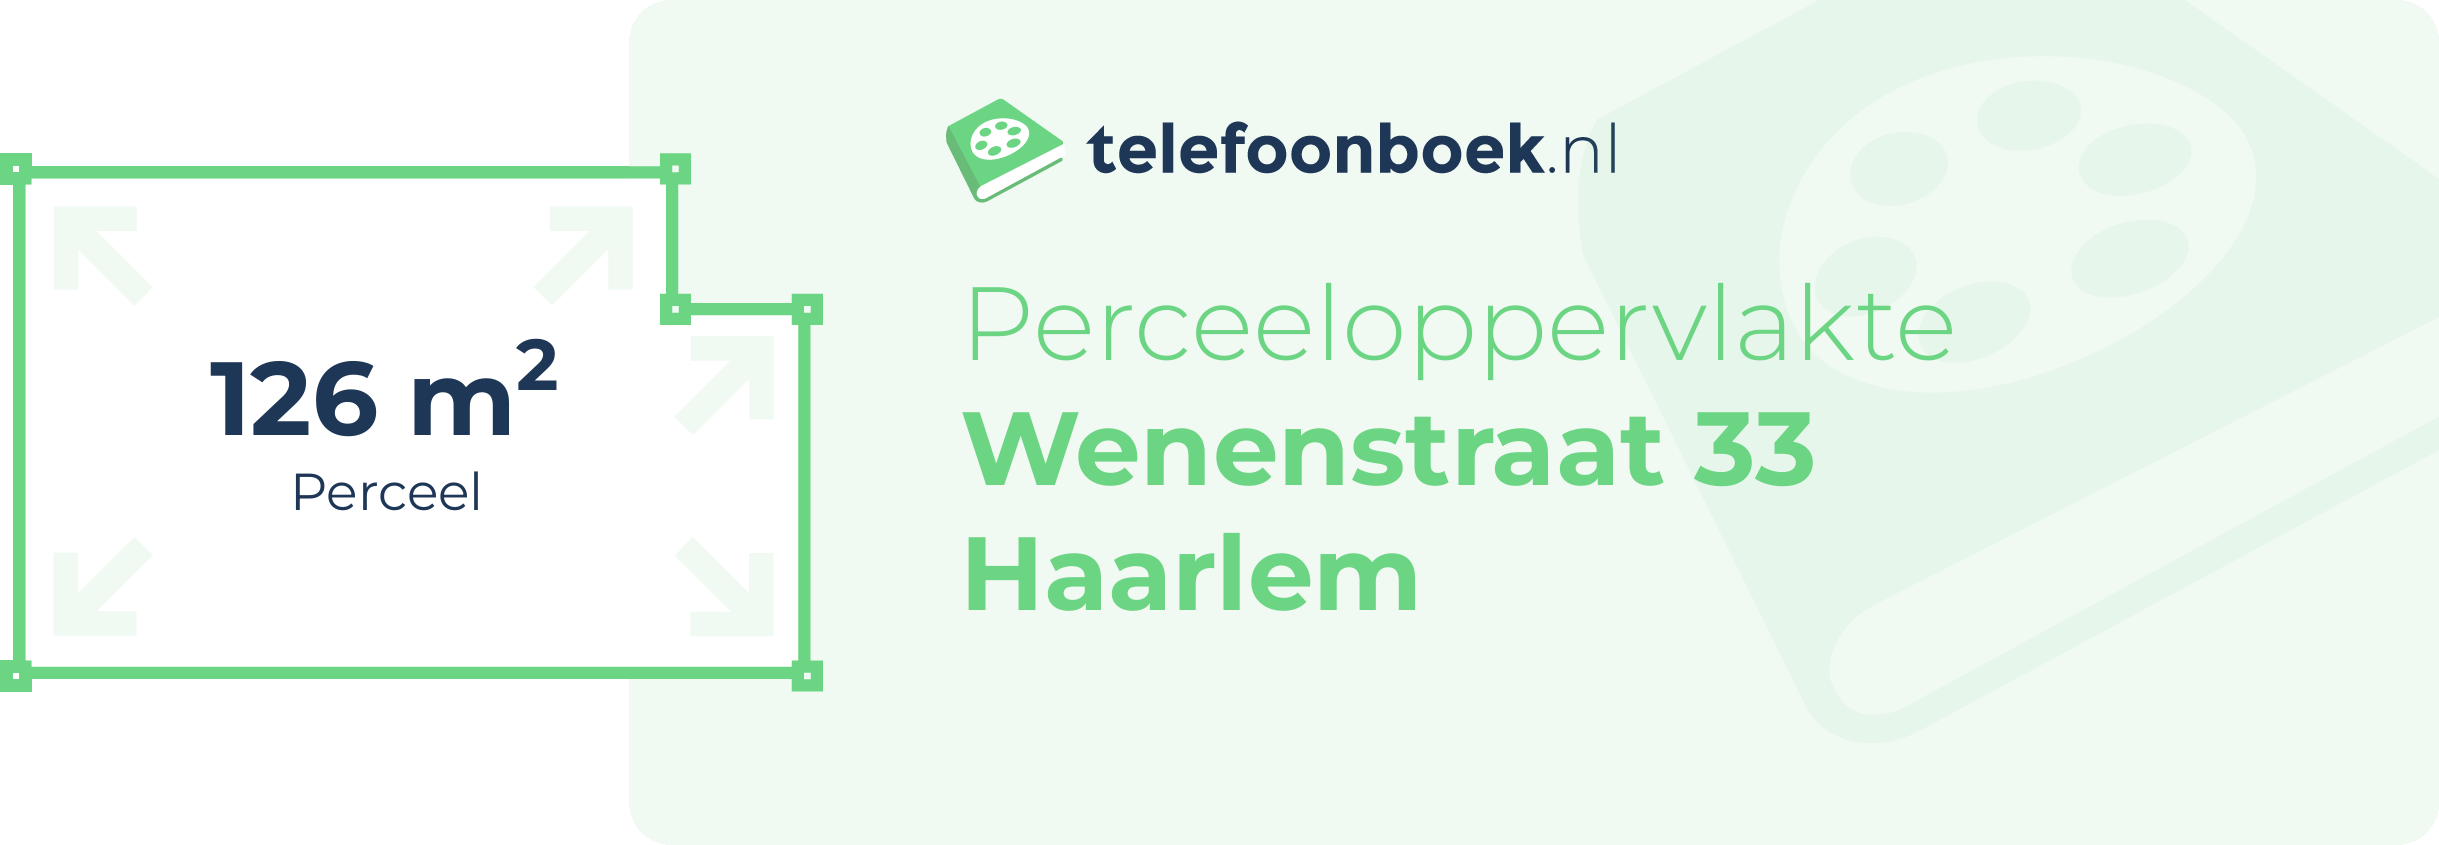 Perceeloppervlakte Wenenstraat 33 Haarlem